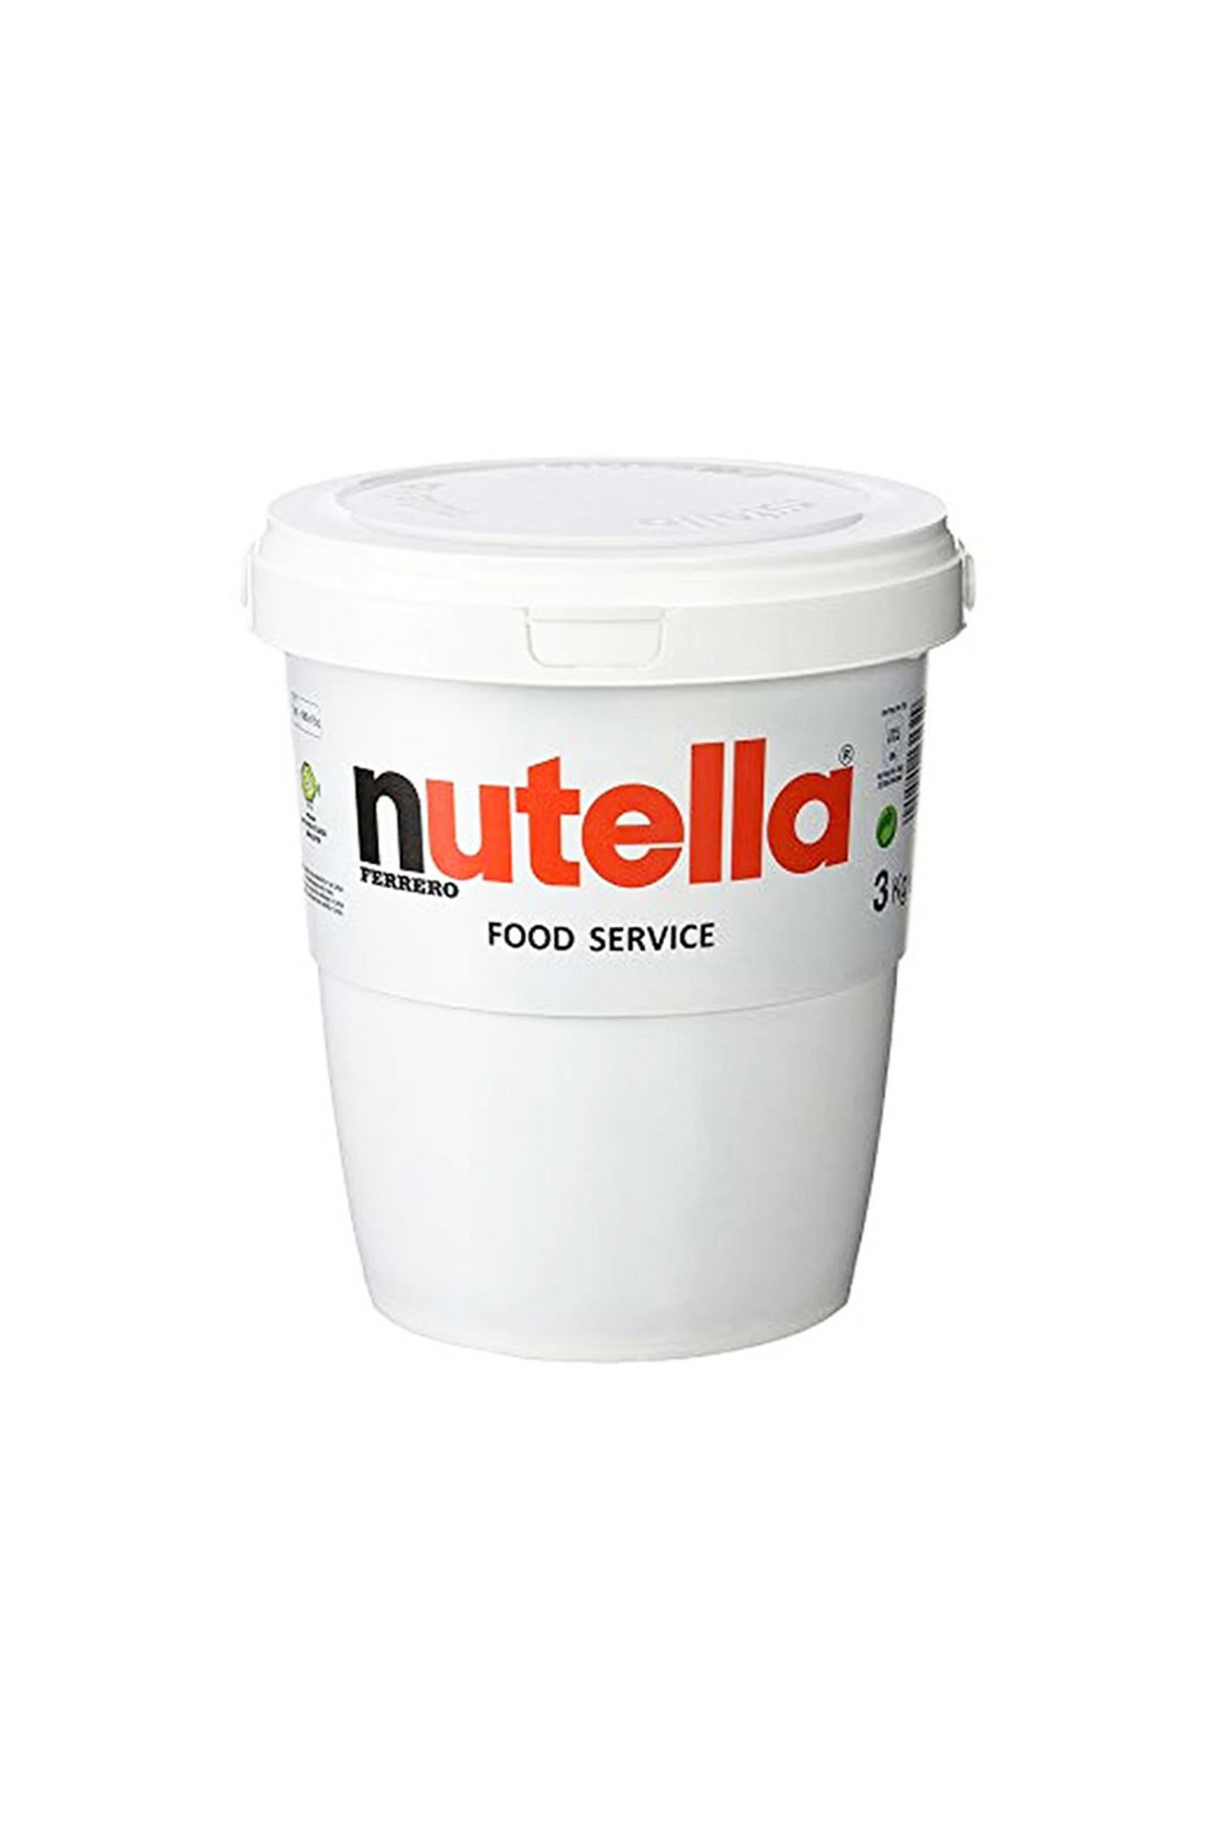 nutella chocolate spread 3kg